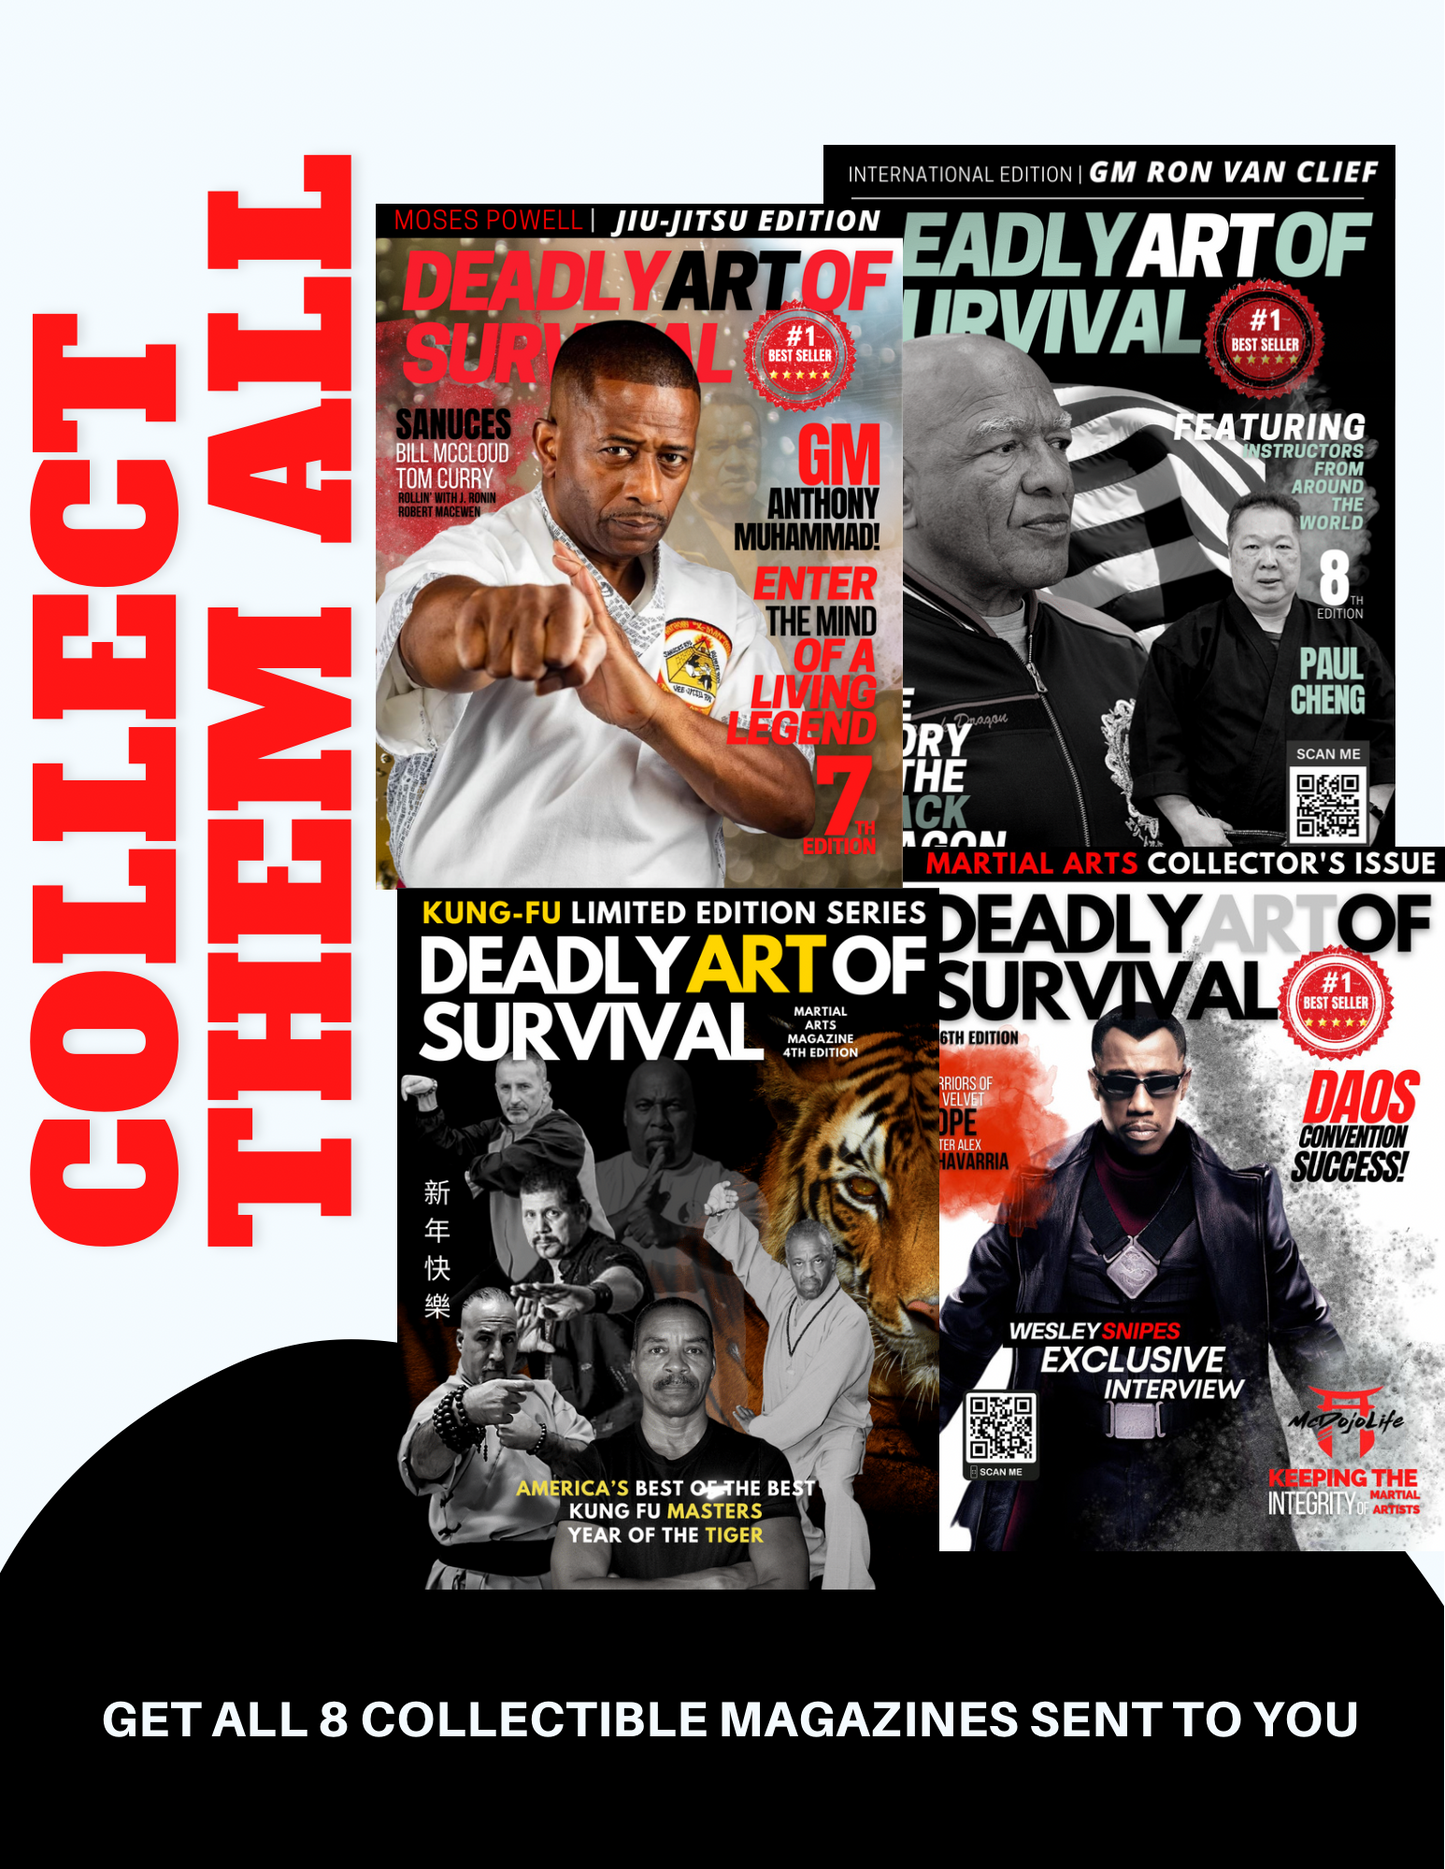 Collect 4 DAOS Magazines deadlyartofsurvival.com